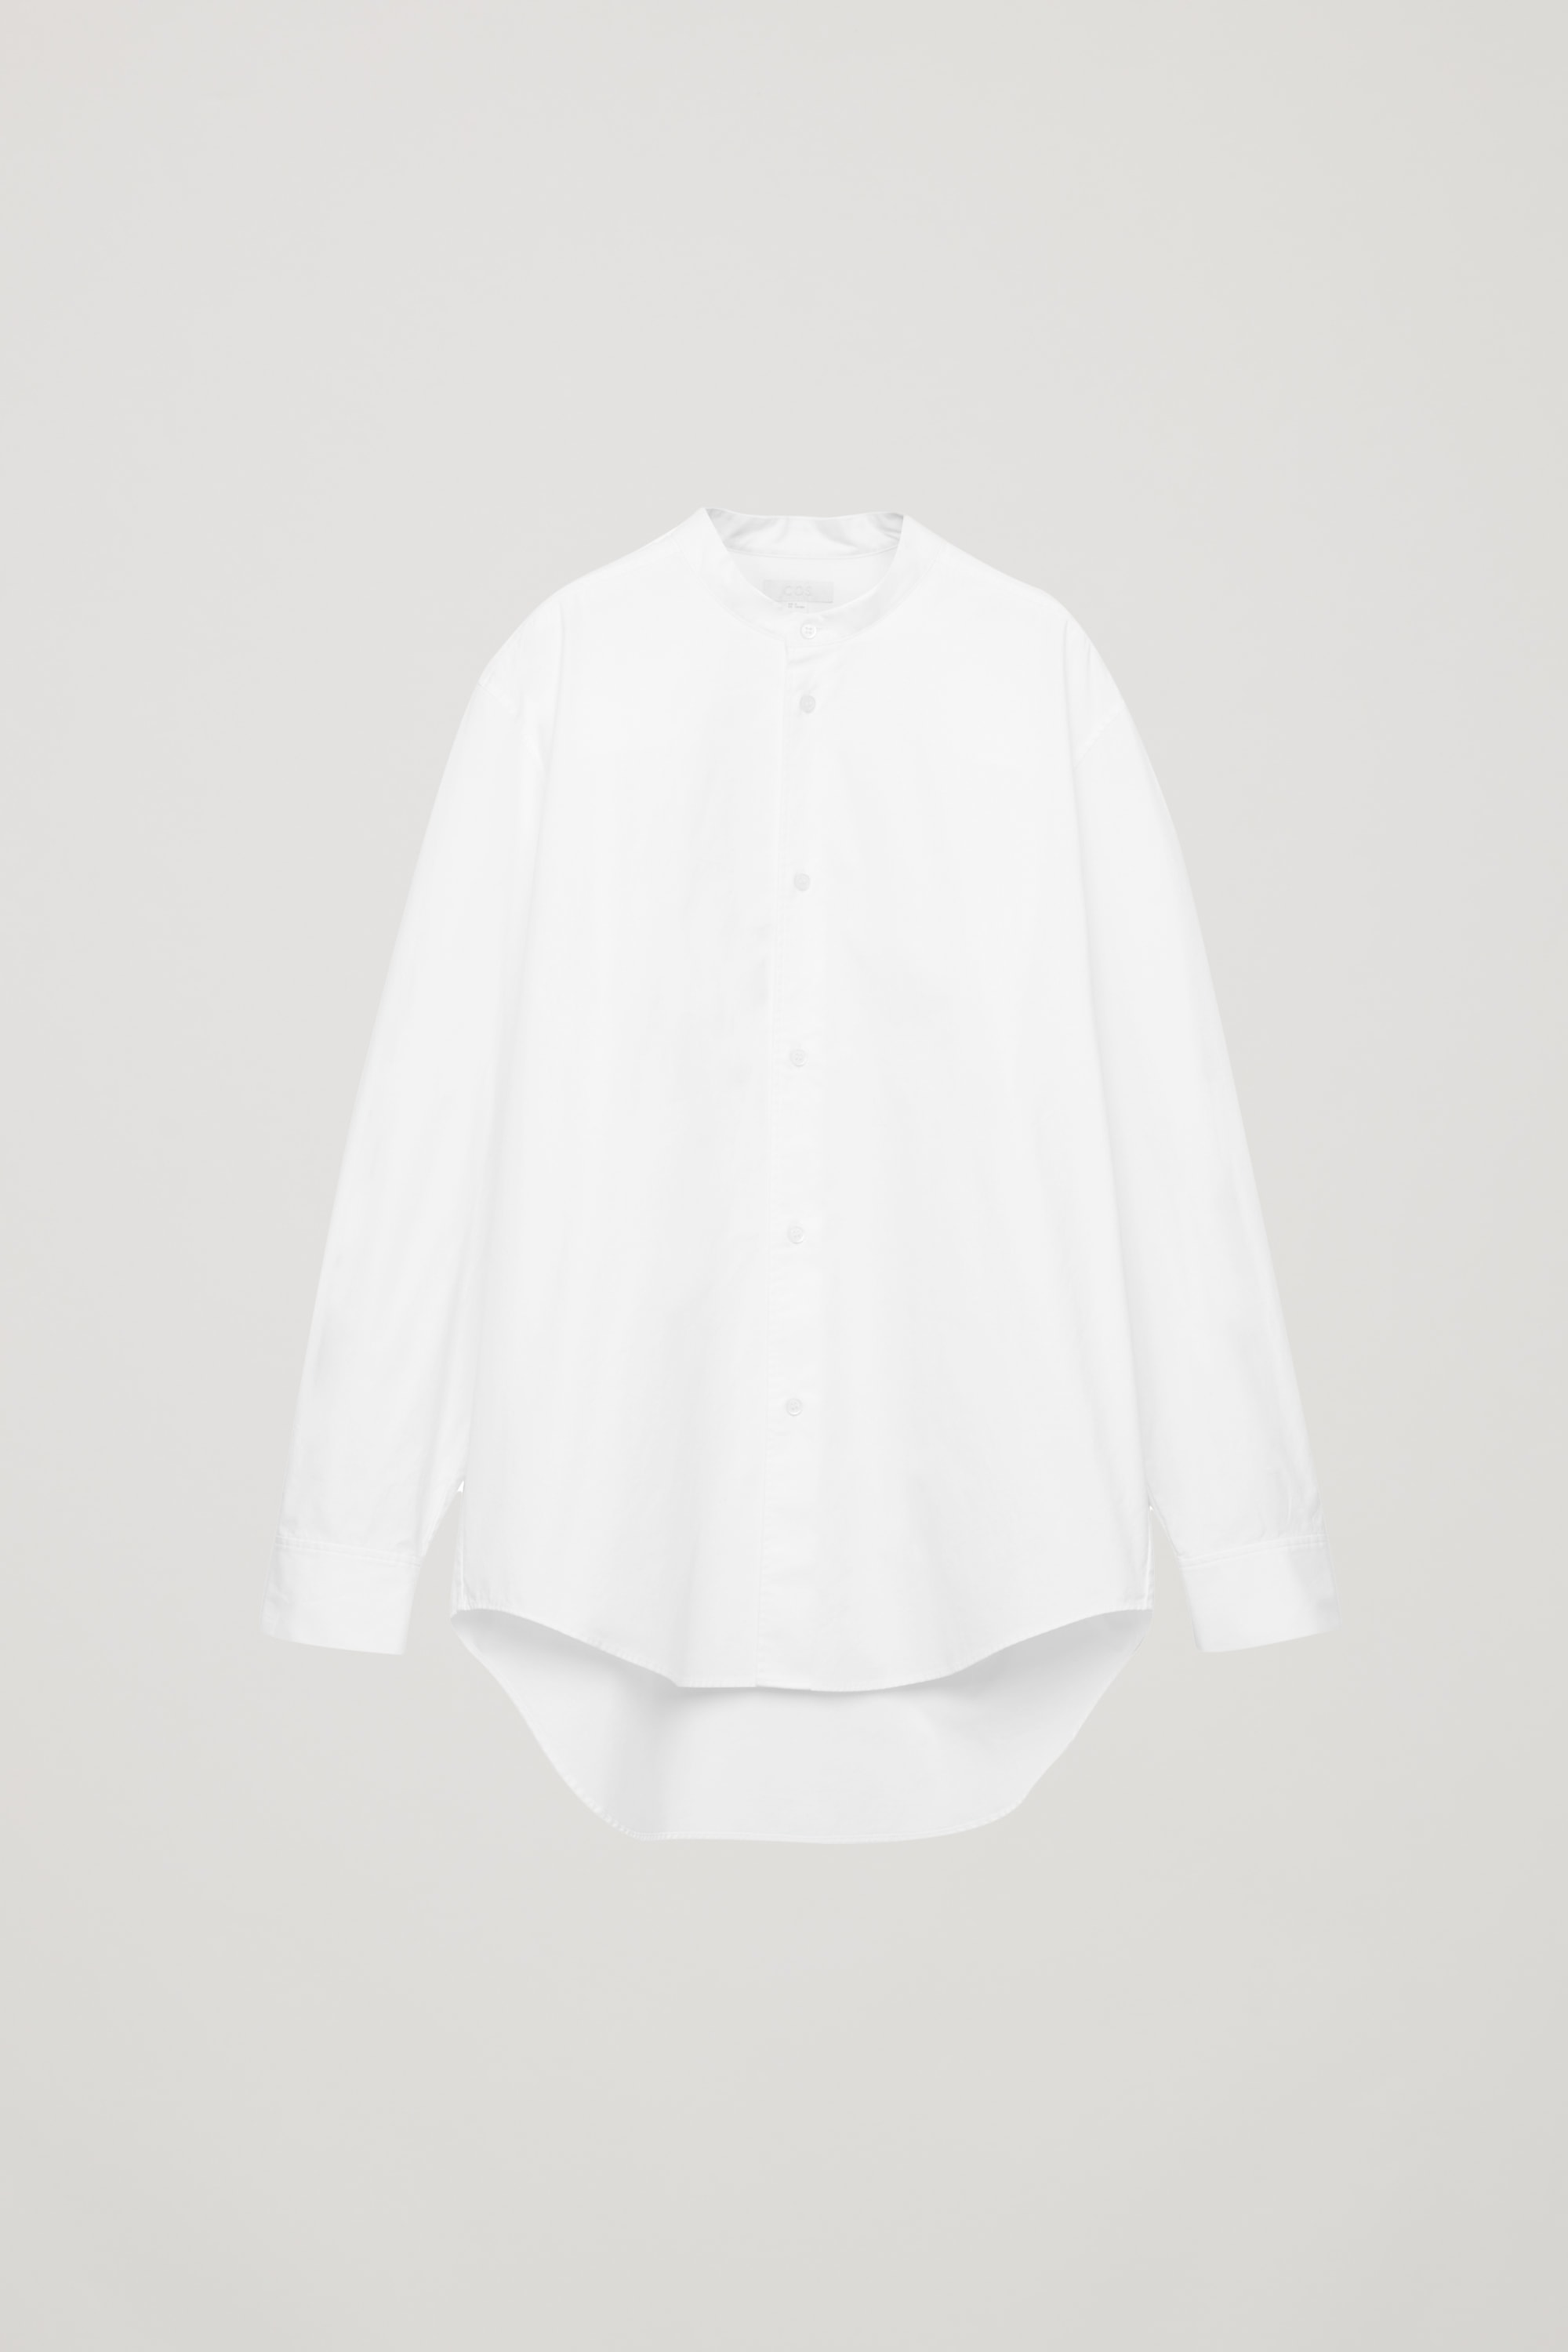 專注剪裁－COS 推出全新 White Shirt Project 系列